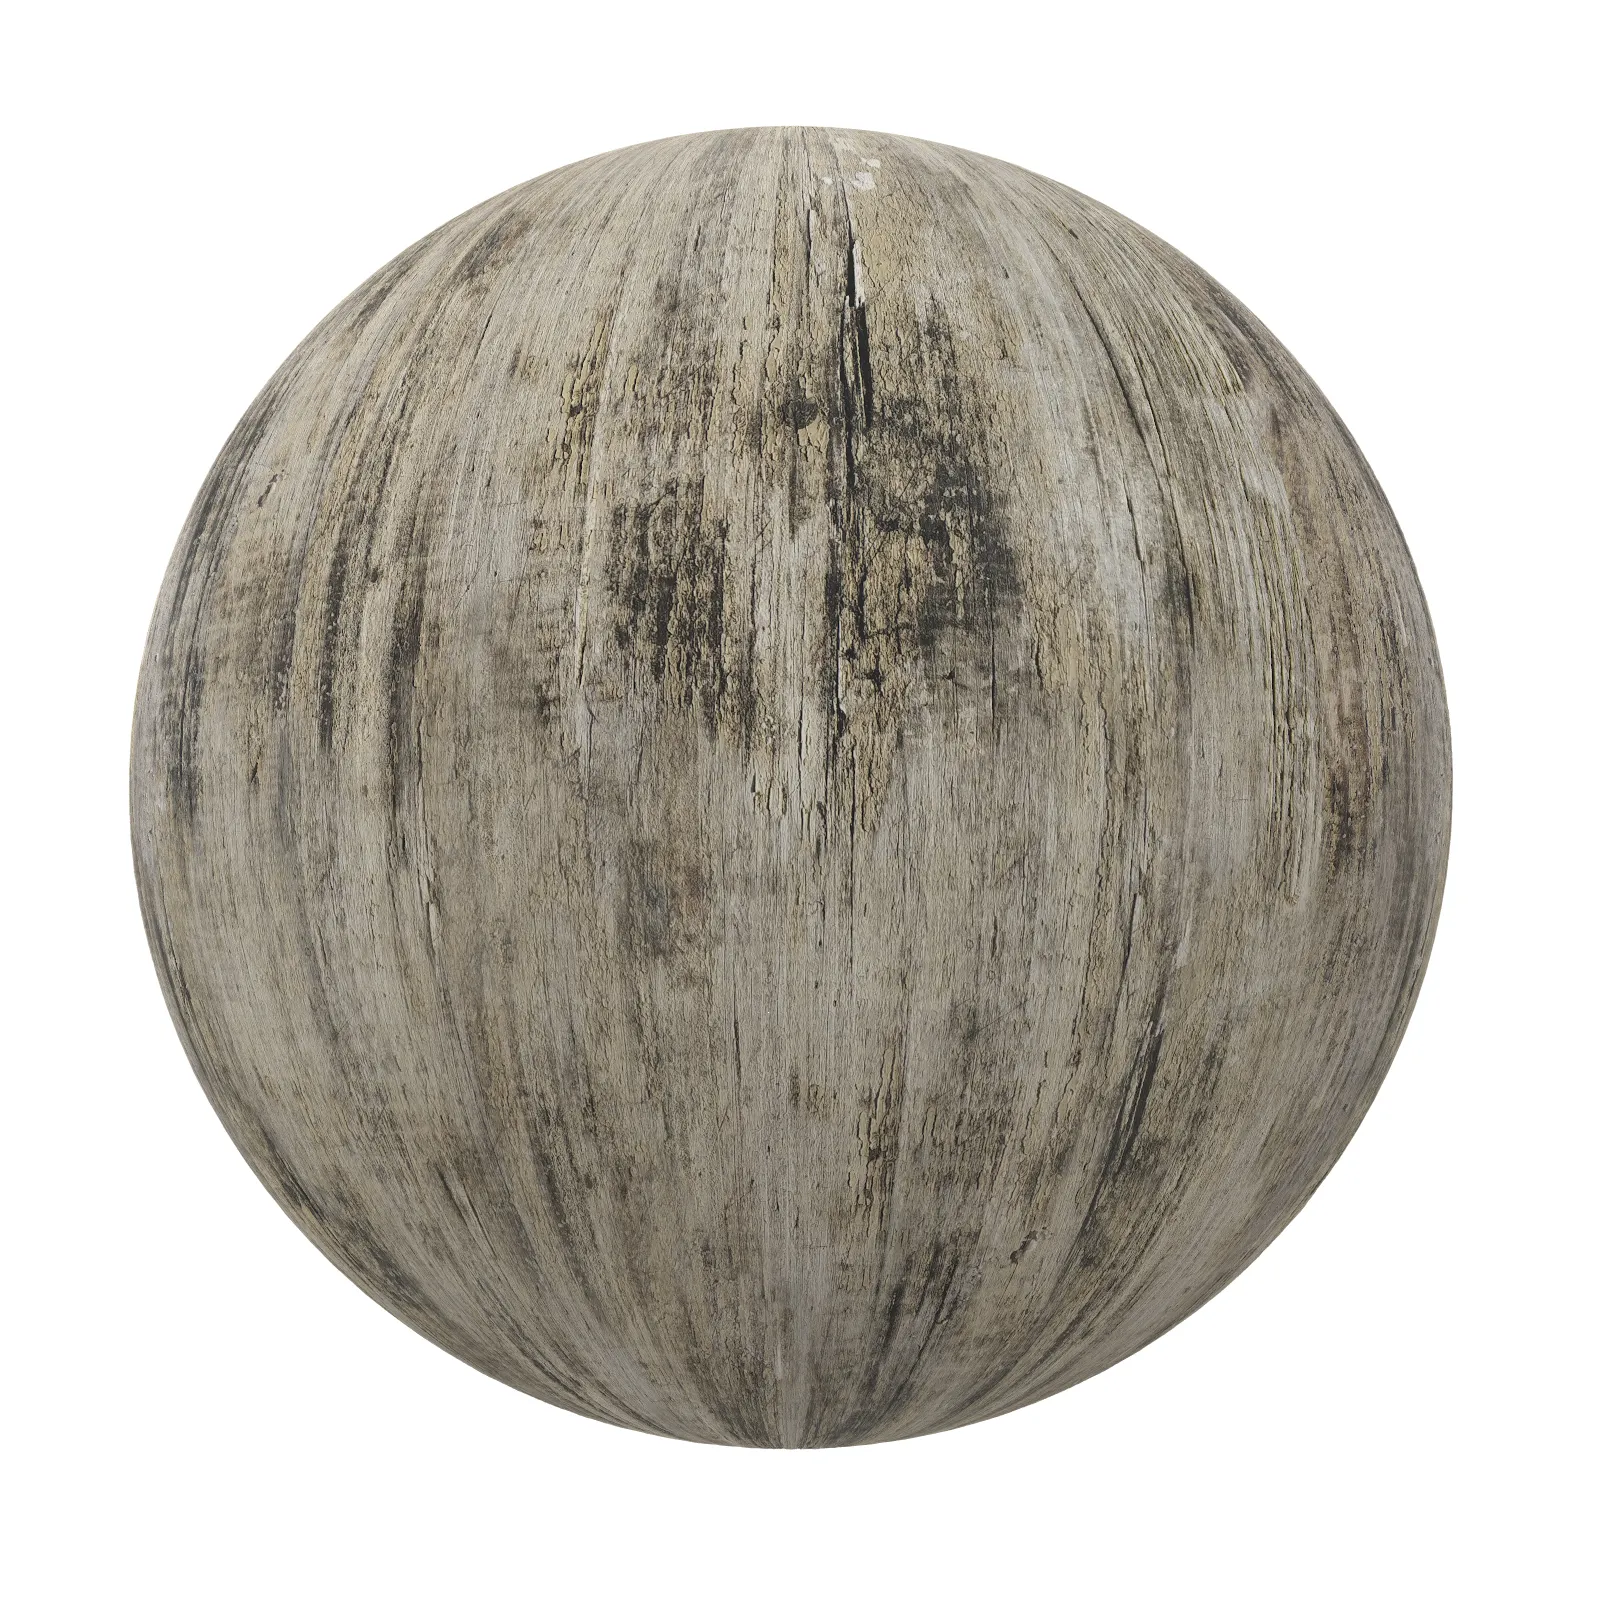 3ds Max Files – Texture – 8 – Wood Texture – 116 – Wood Texture by Minh Nguyen